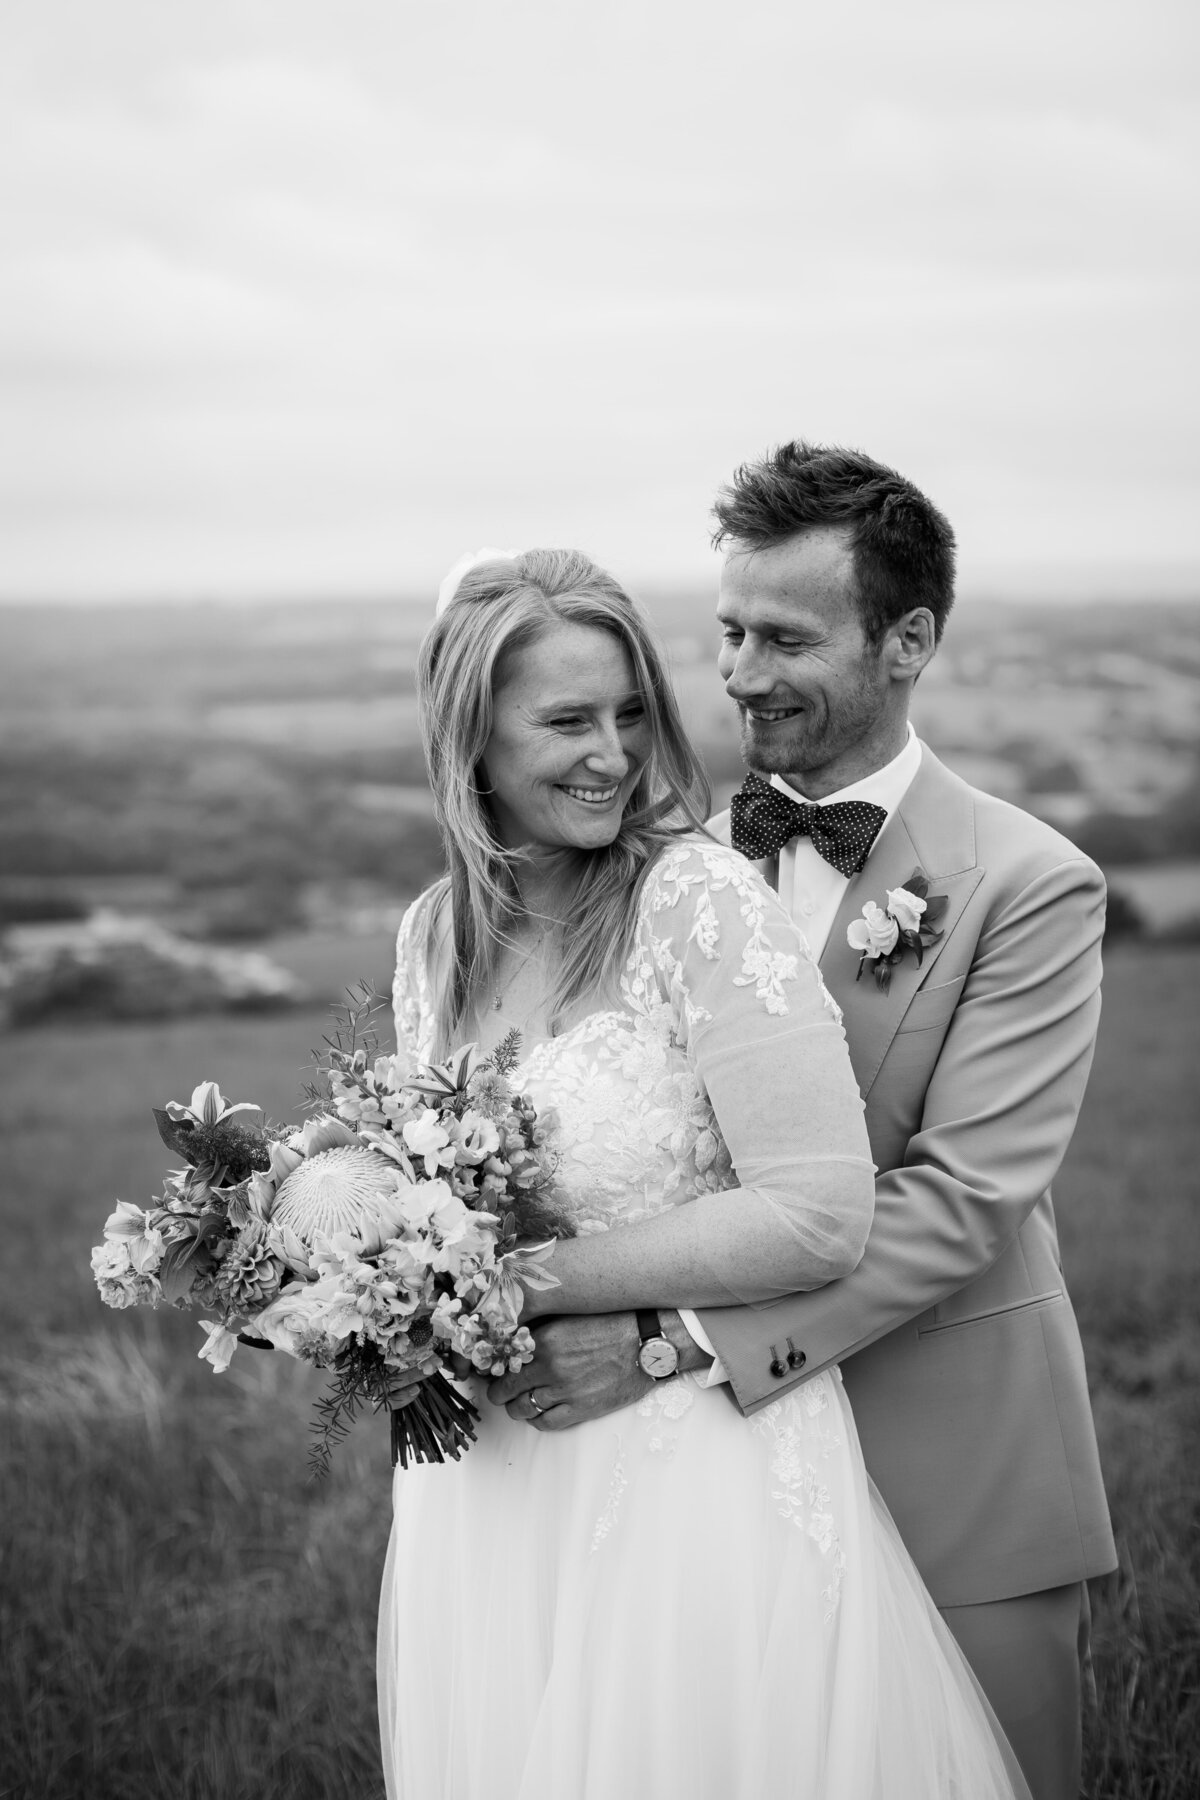 Wedding photography - Bride and groom portraits - Surrey